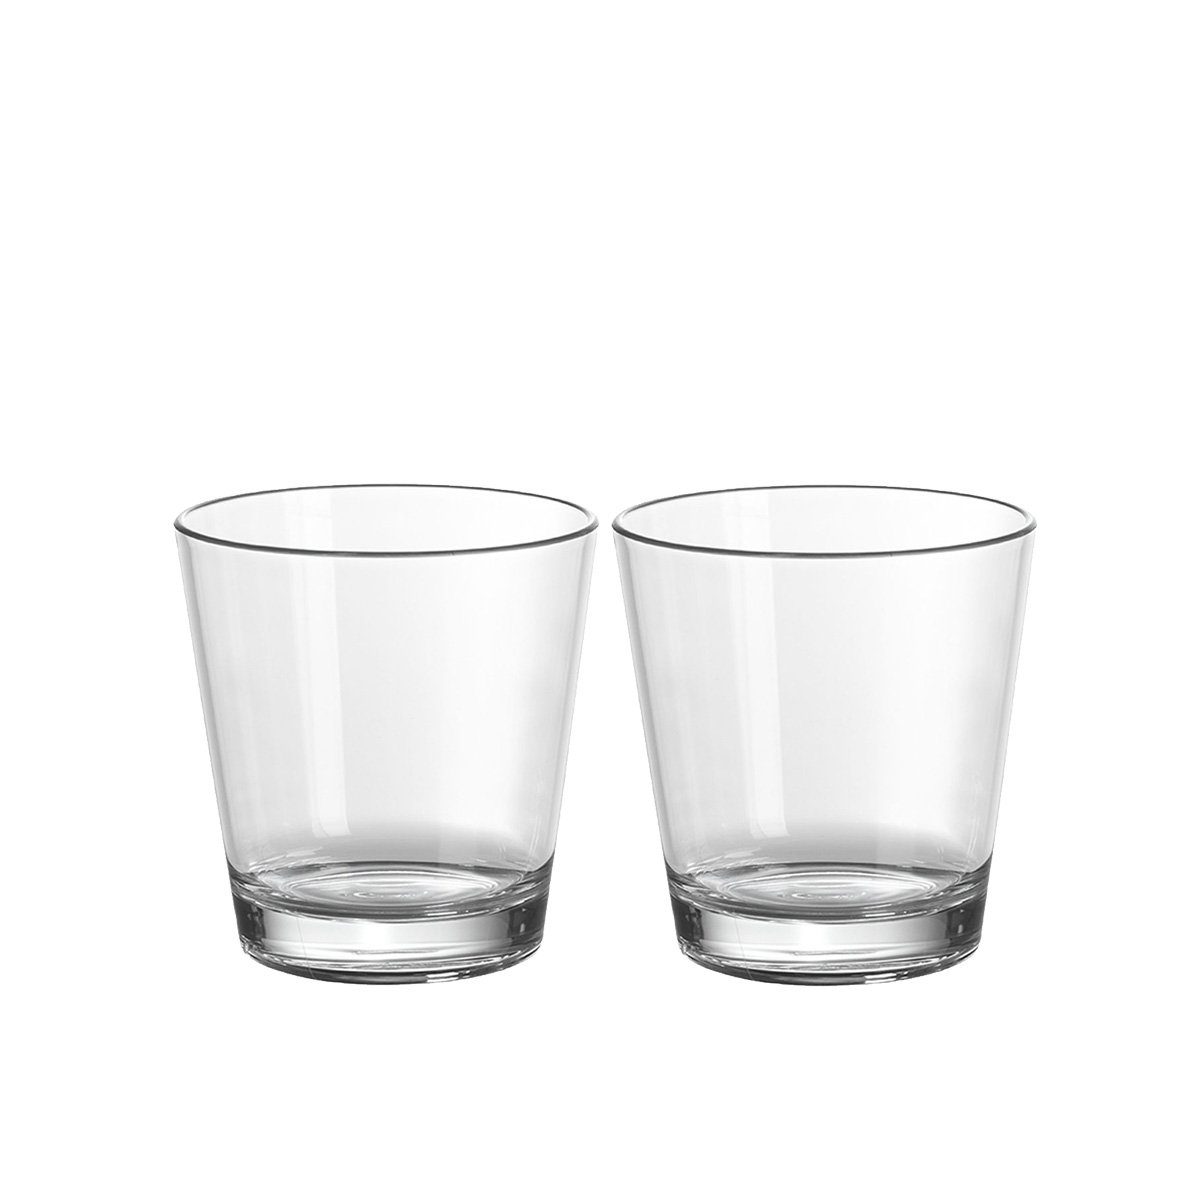 GIMEX Glas 2 x Saftglas aus bruchfestem Polycarbonat - 250ml, Kunststoff